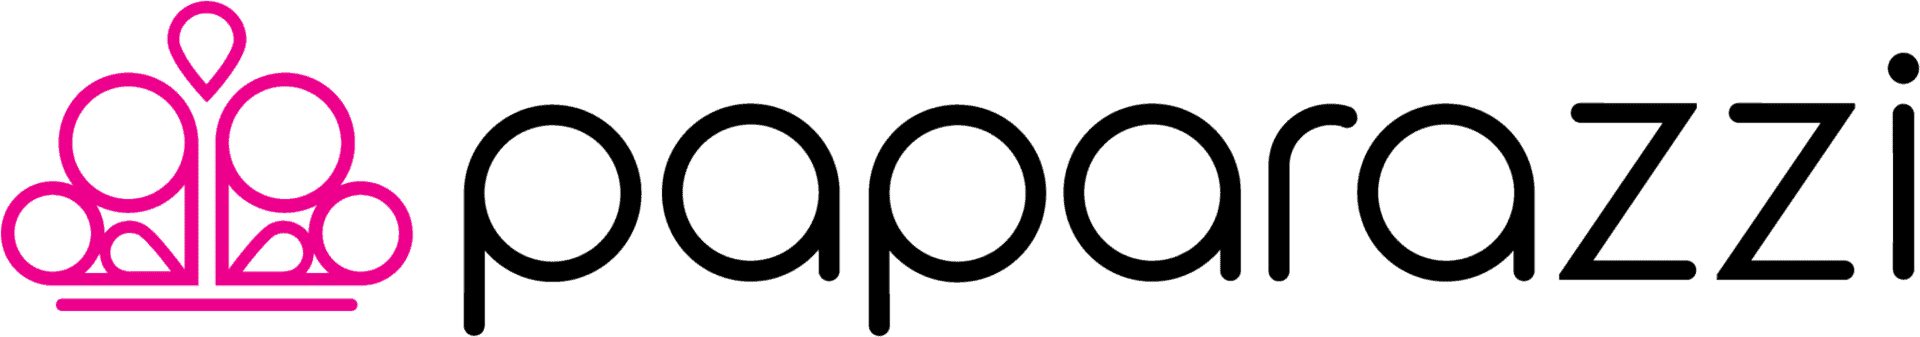 Paparazzi Logo Black